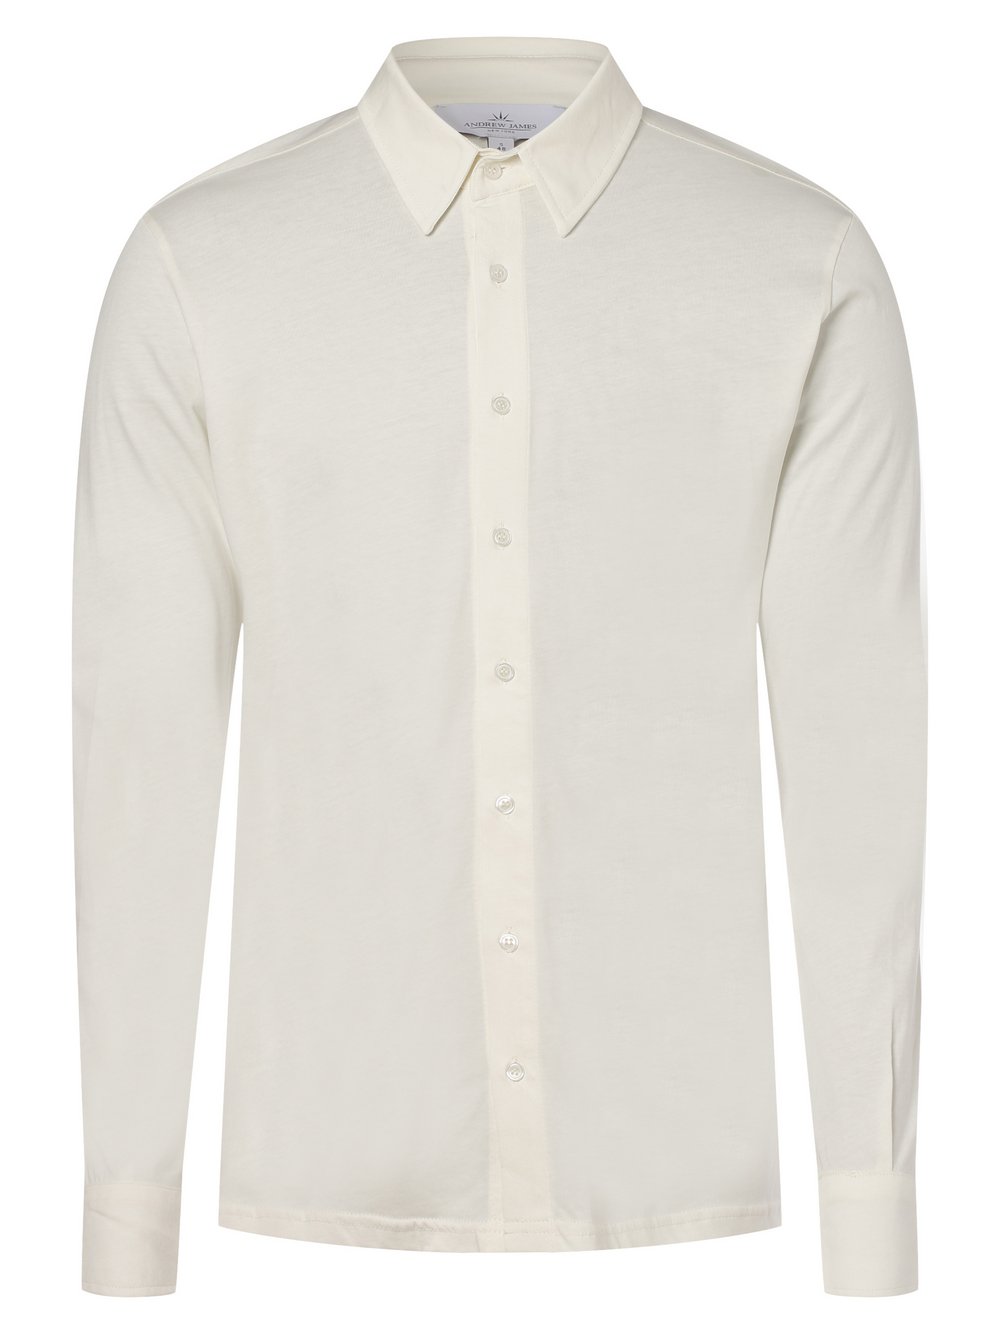 Andrew James New York - Koszula męska – Jaxon, biały